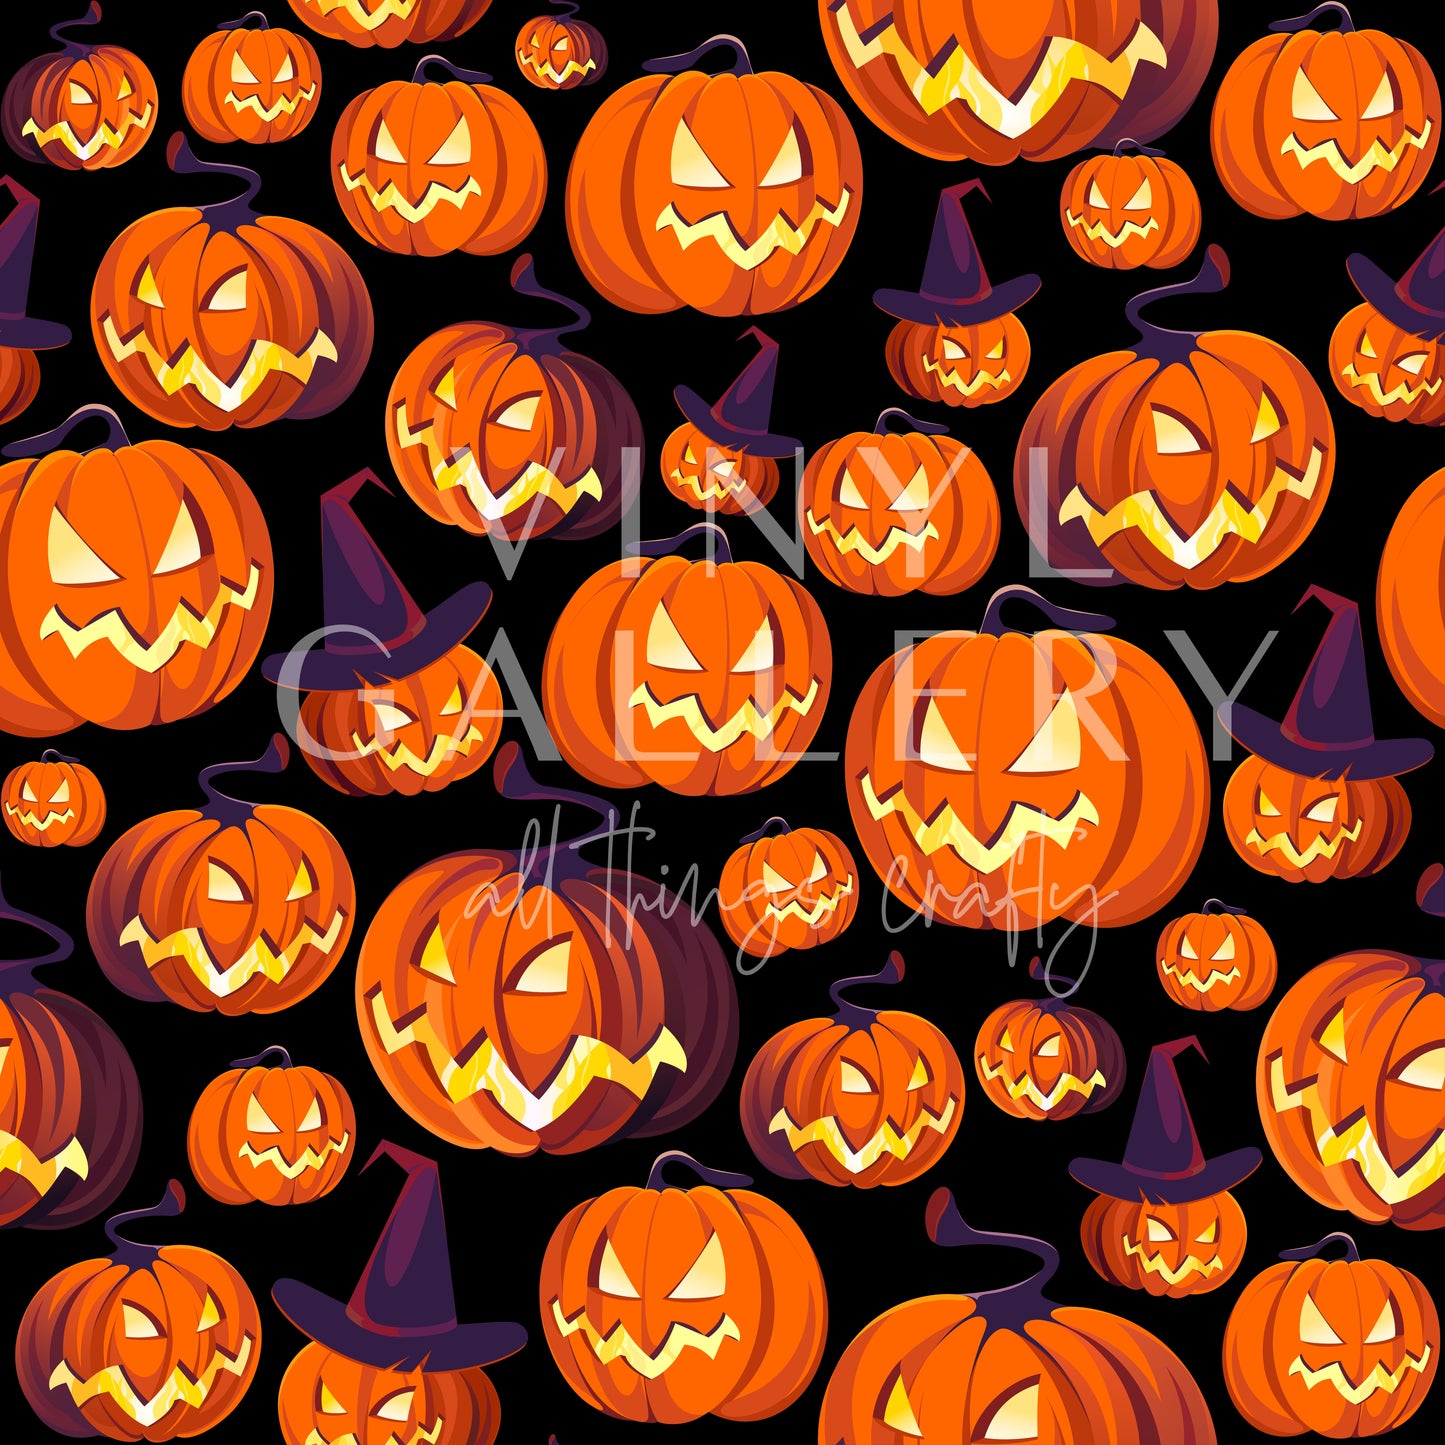 Fall/Halloween Patterns